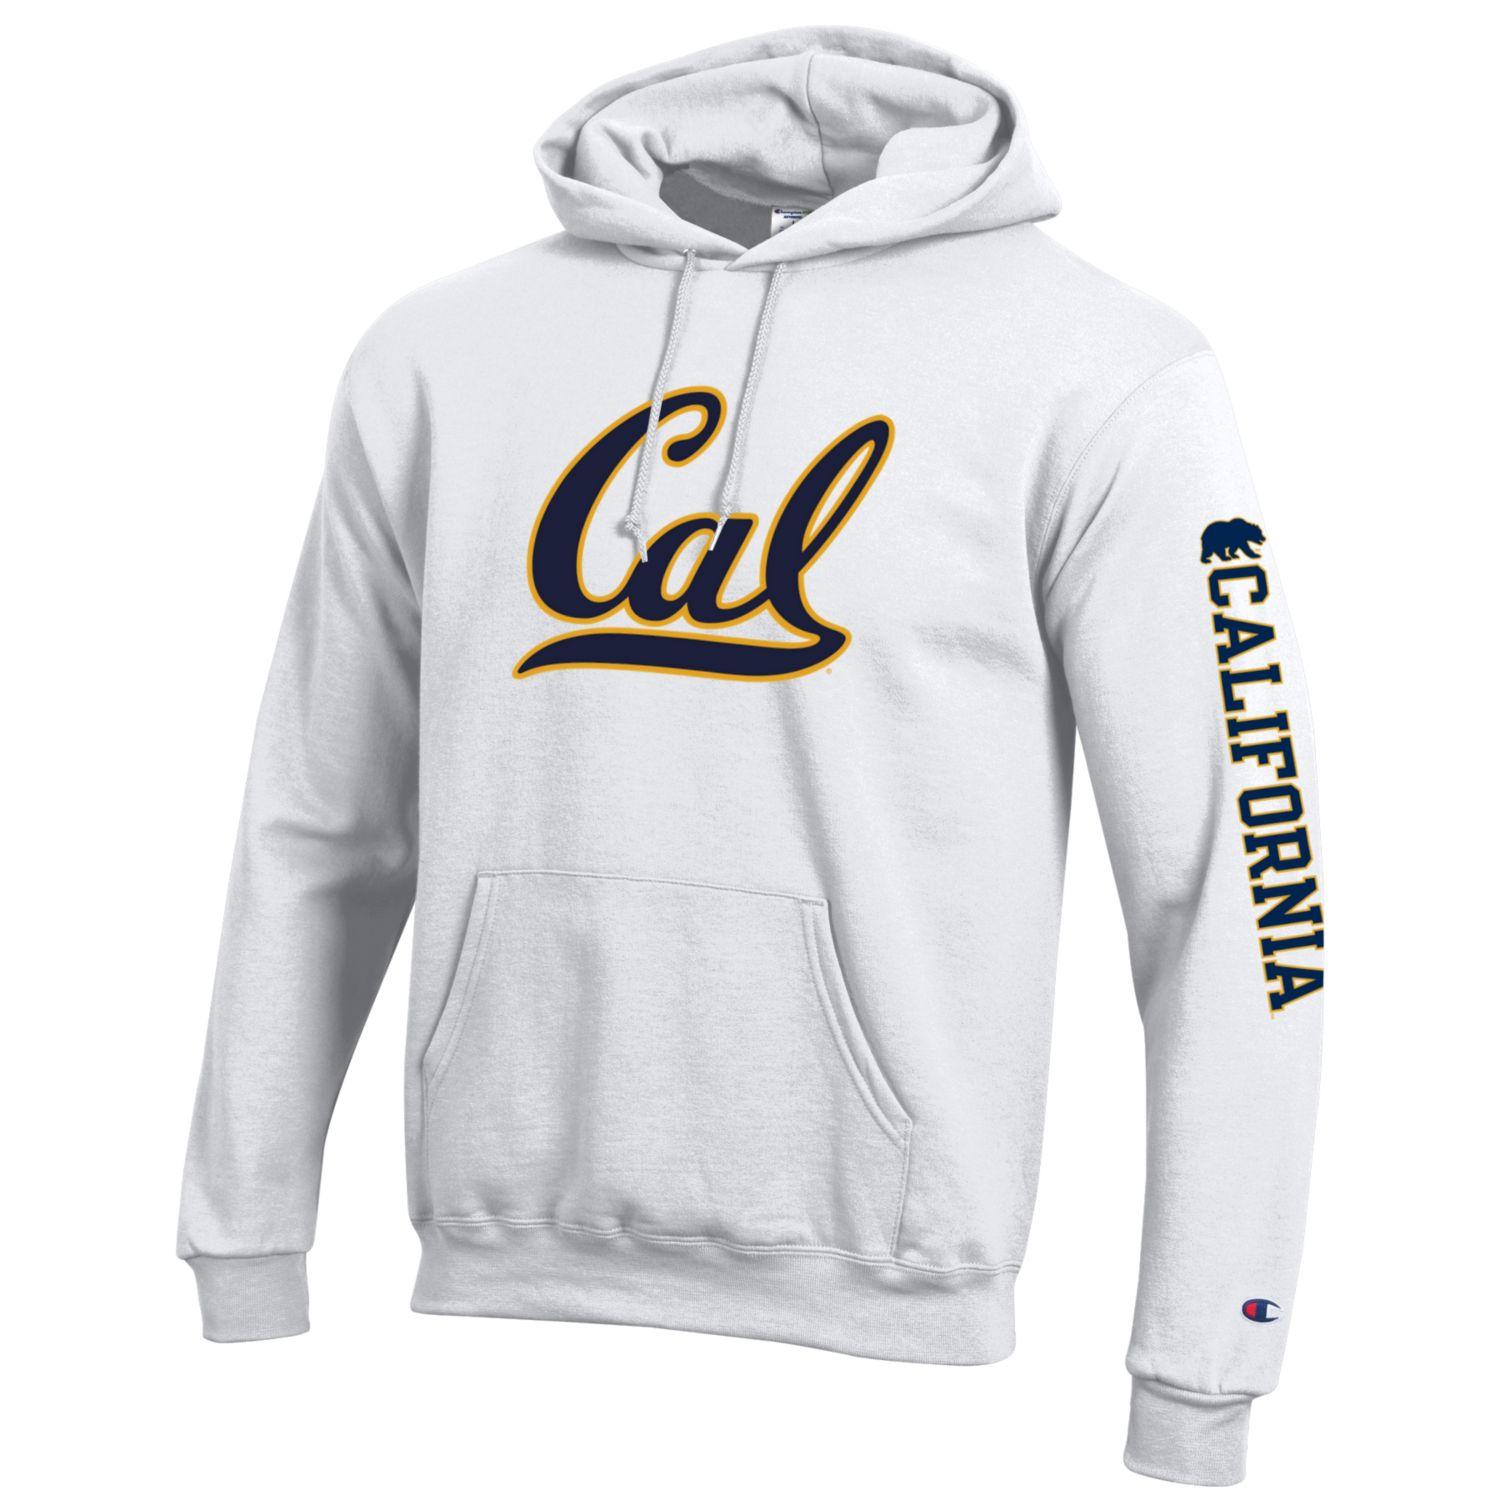 U.C. Cal Champion hoodie sweatshirt-White – Shop College